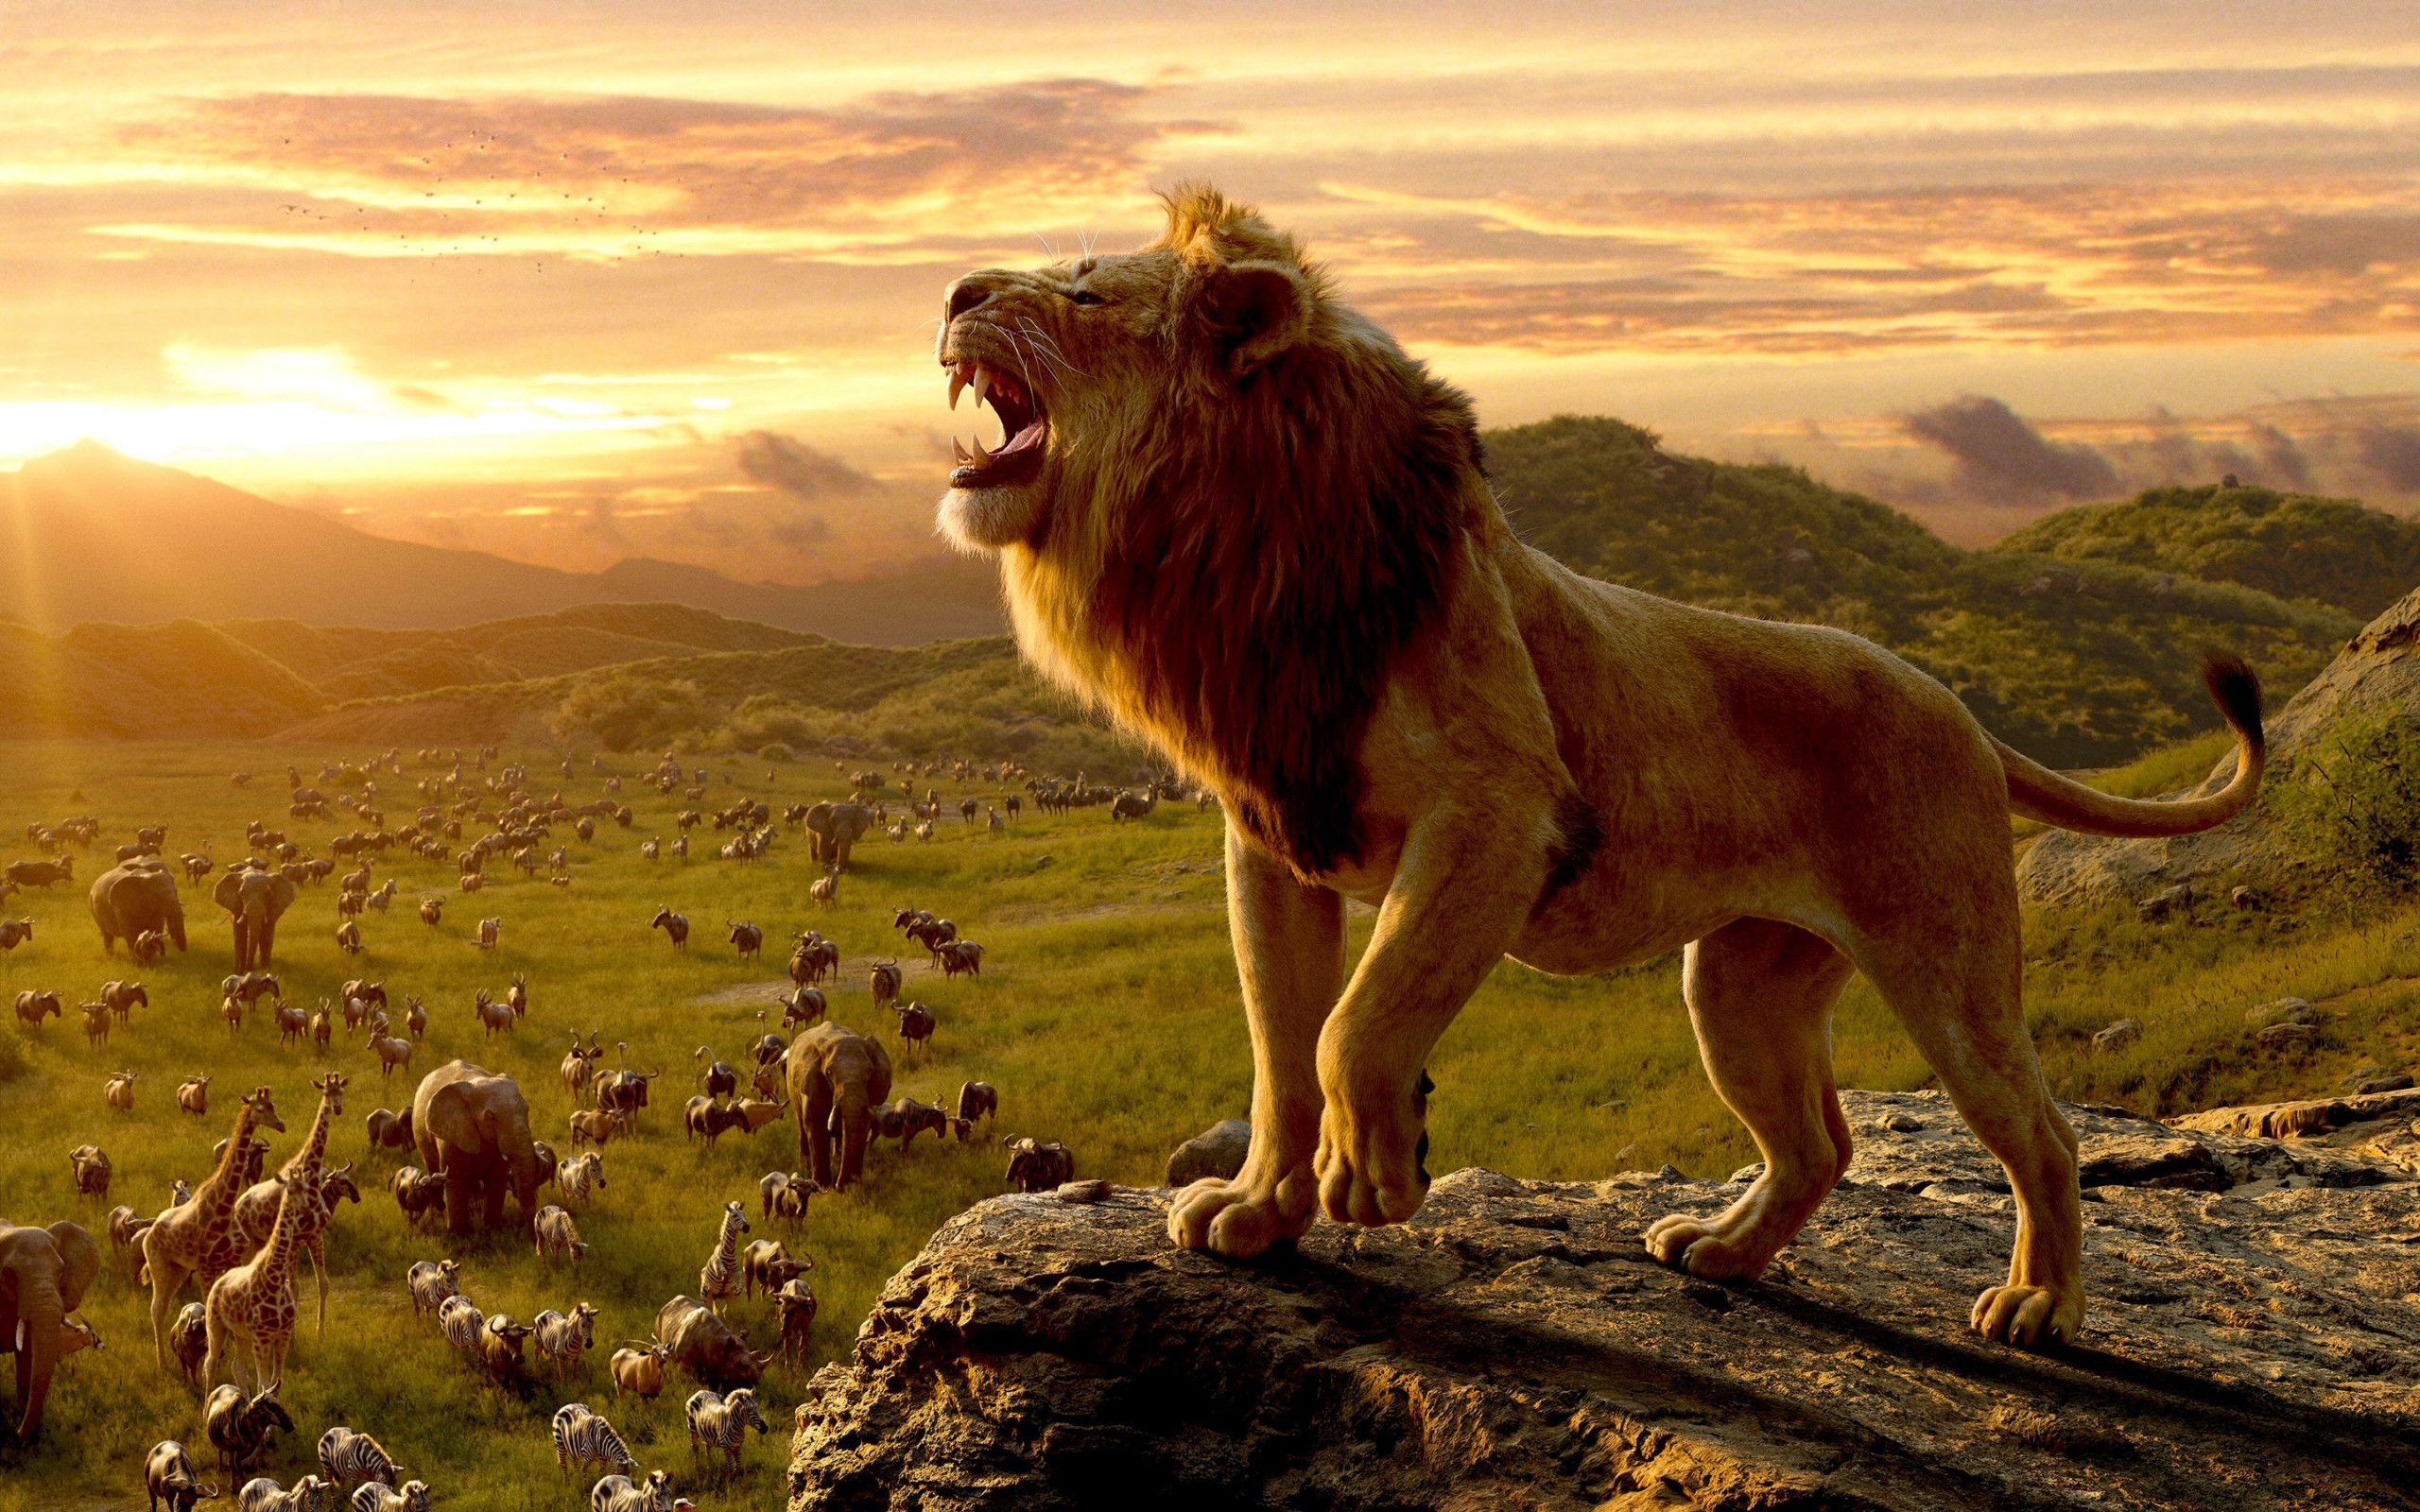 Download wallpaper: Simba, the lion king 2560x1600